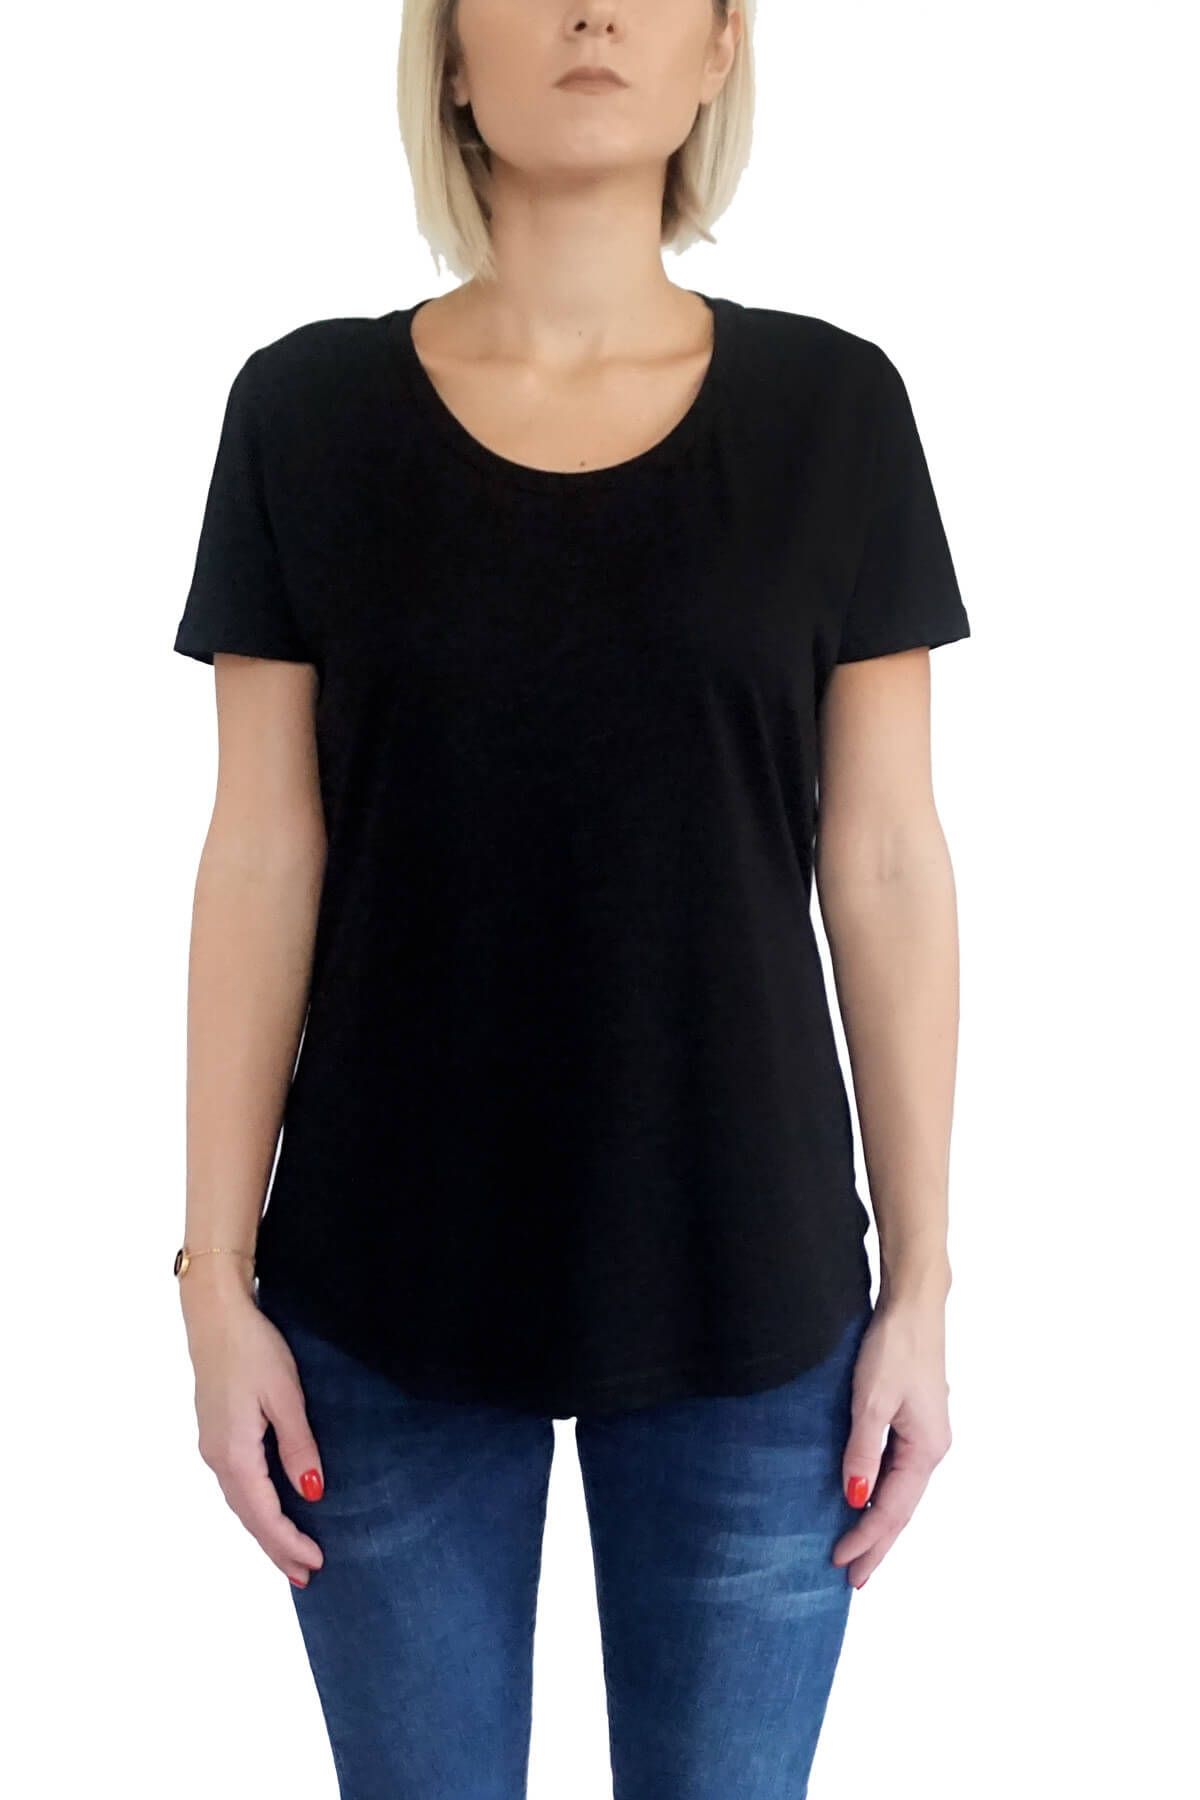 Mof Basics Kadın Siyah T-Shirt GSYT-S